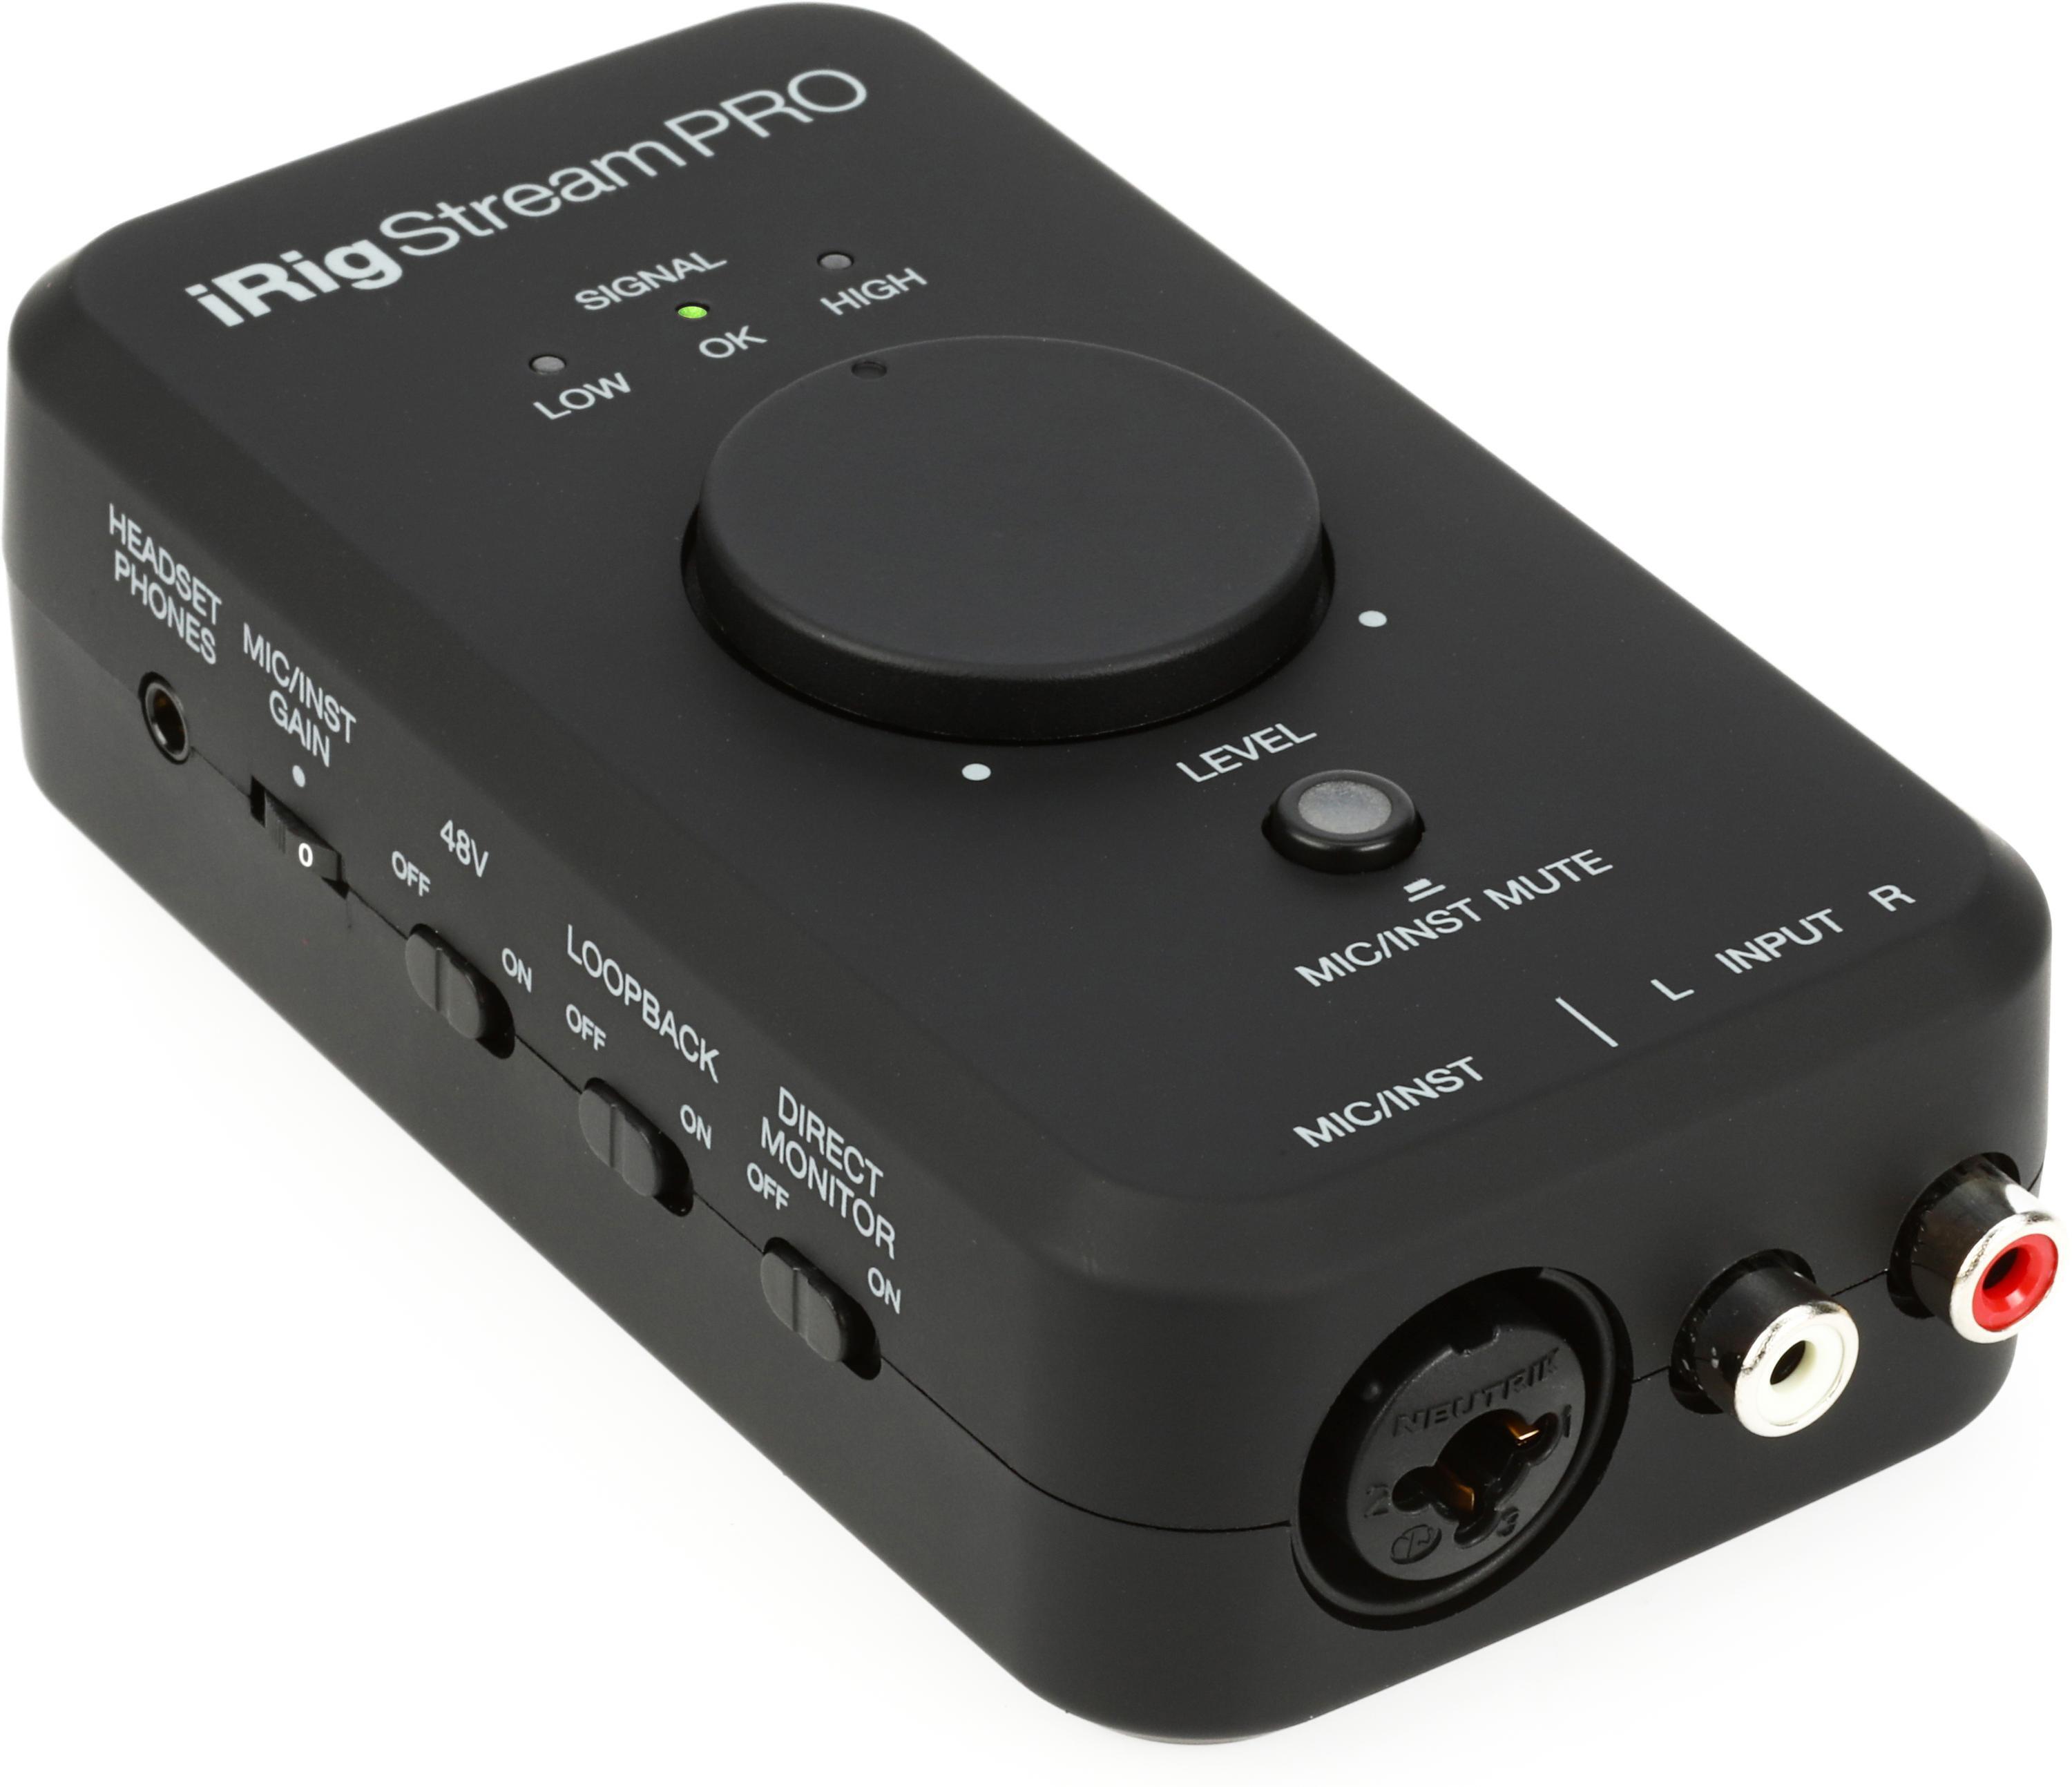 IK Multimedia iRig Stream Pro - Streaming Audio Interface for iOS